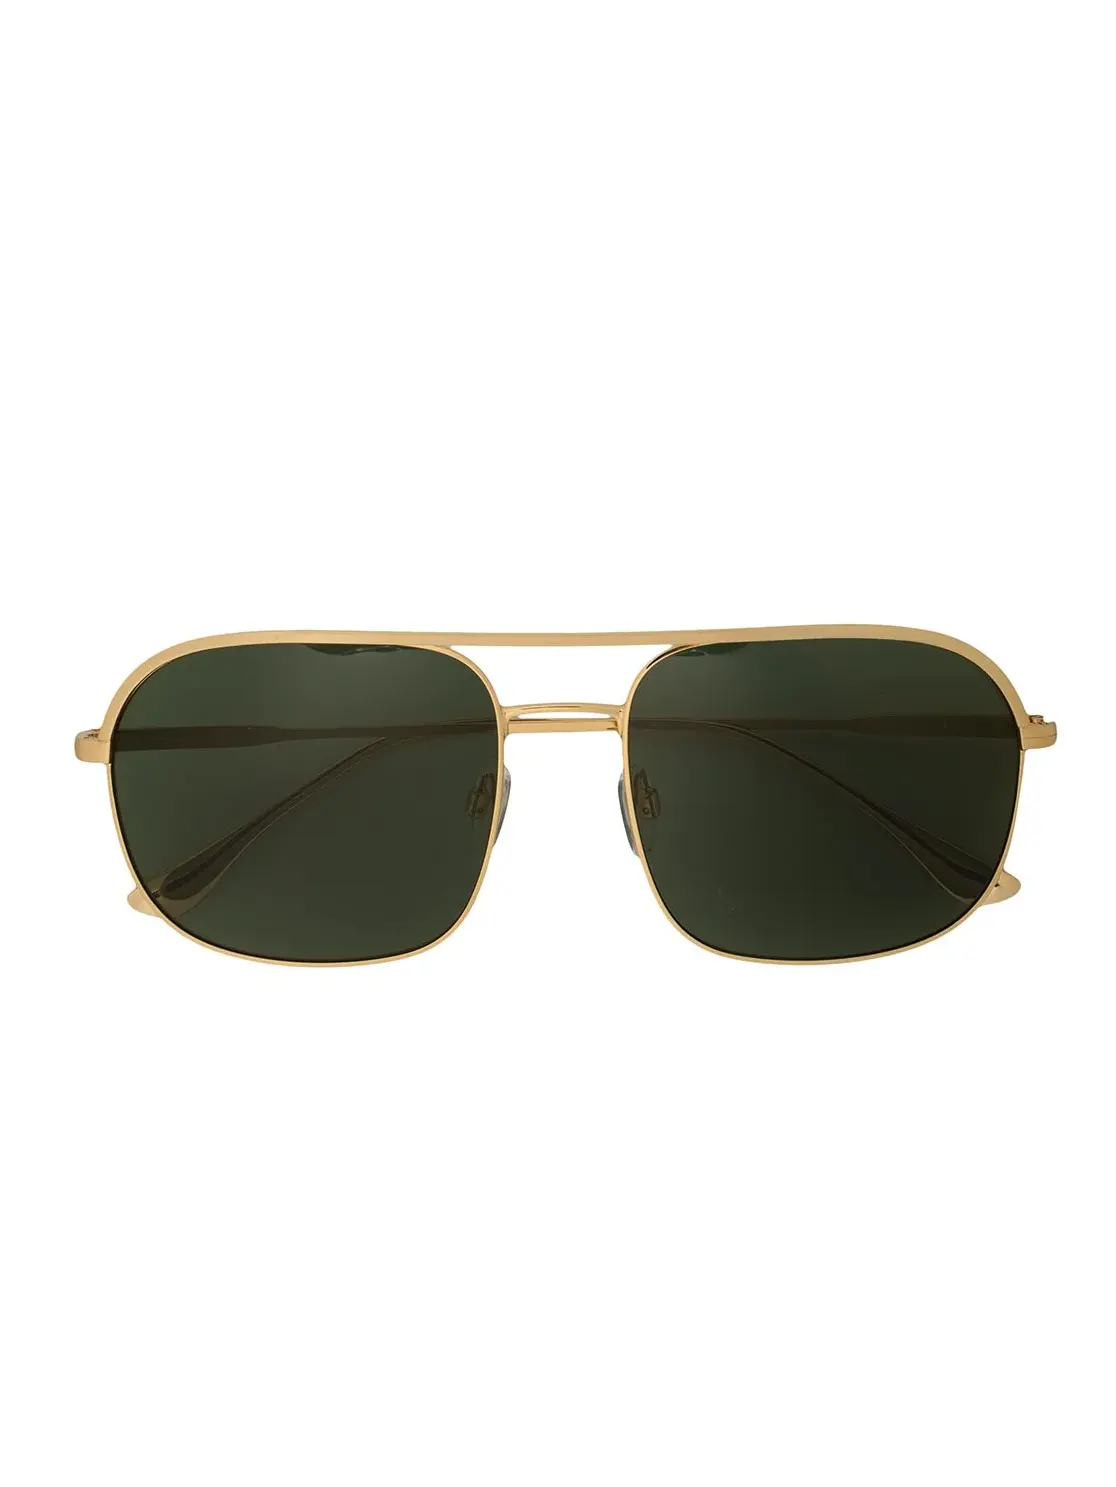 Highland sunglasses, gold